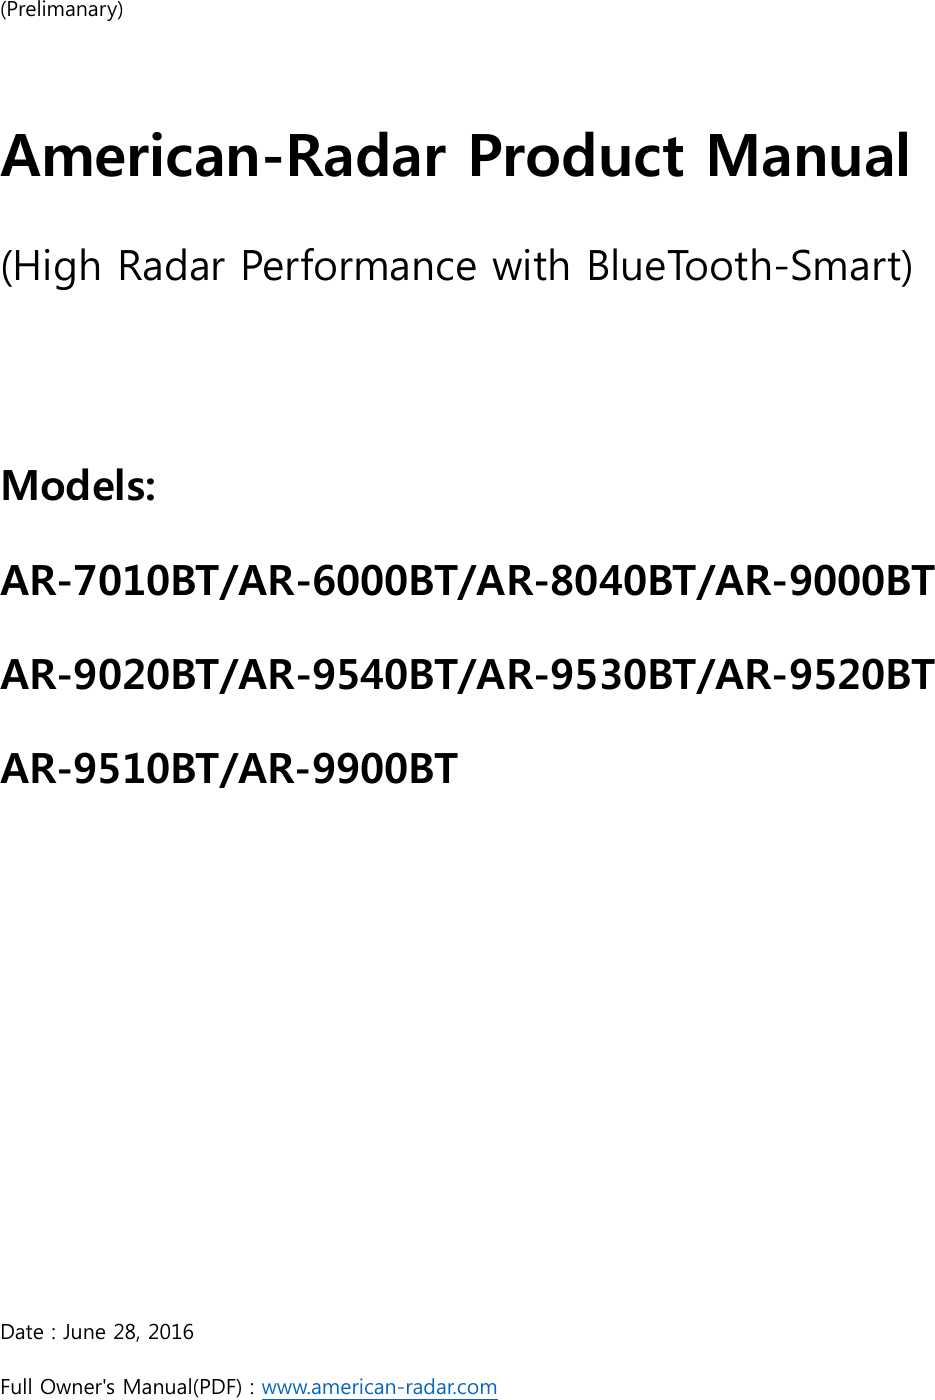 (Prelimanary)  American-Radar Product Manual (High Radar Performance with BlueTooth-Smart)  Models: AR-7010BT/AR-6000BT/AR-8040BT/AR-9000BT AR-9020BT/AR-9540BT/AR-9530BT/AR-9520BT AR-9510BT/AR-9900BT      Date : June 28, 2016 Full Owner&apos;s Manual(PDF) : www.american-radar.com 